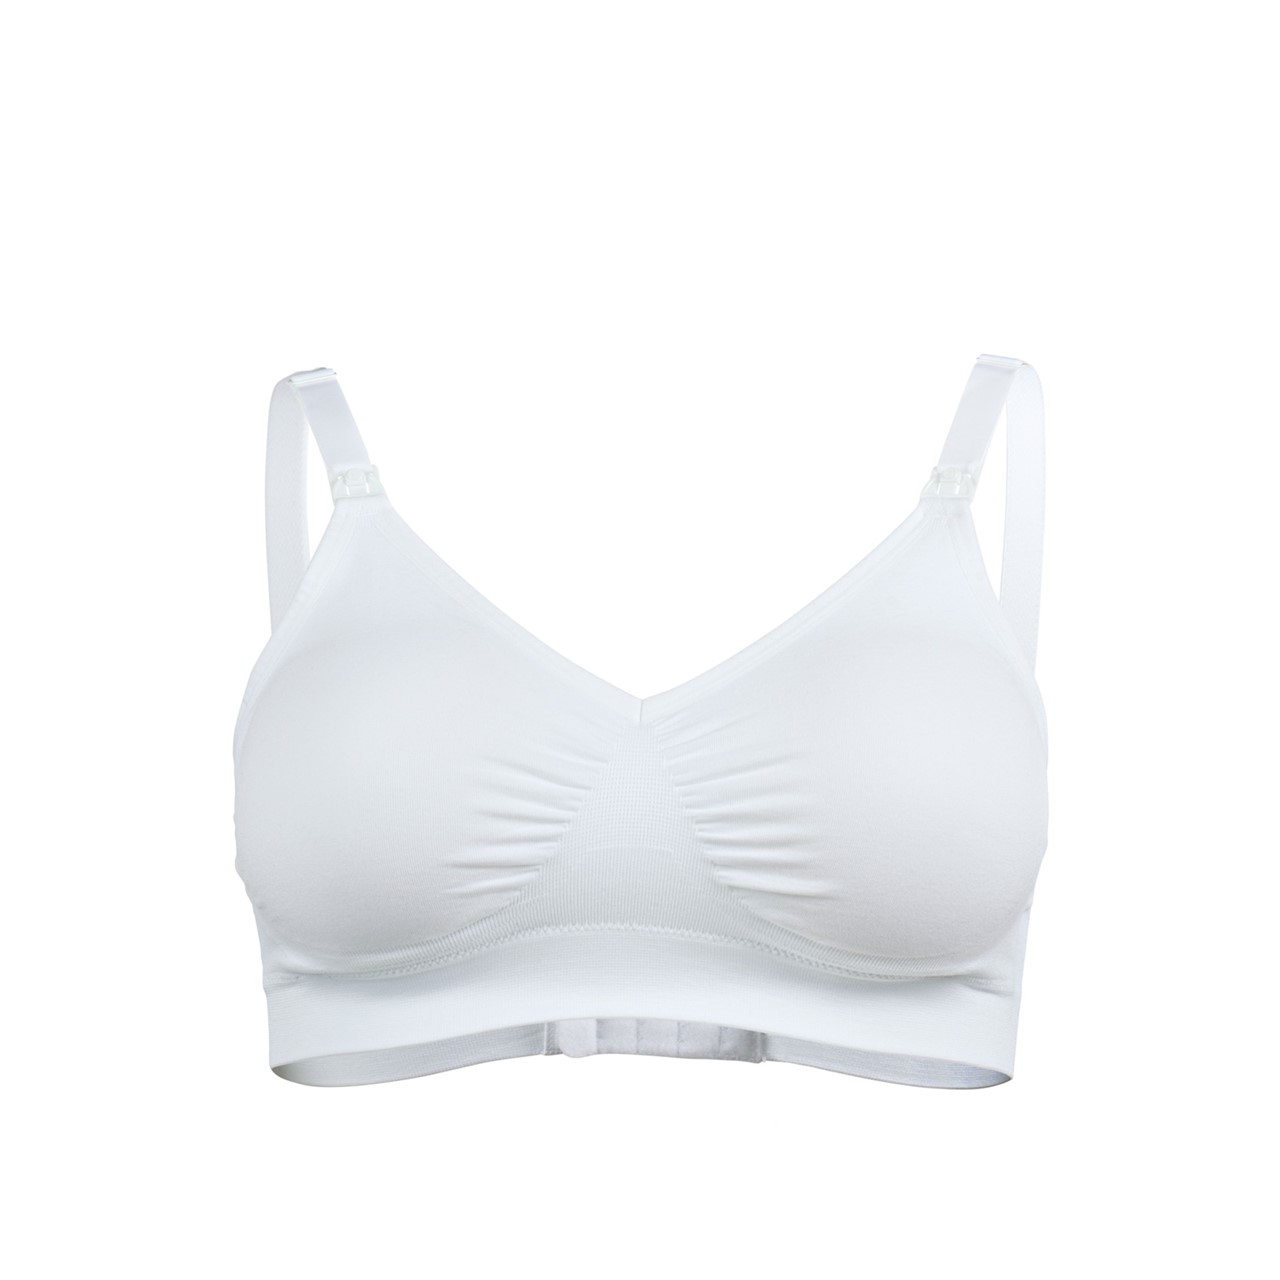 Buy Medela Comfy Bra White Small Size x1 · Nicaragua